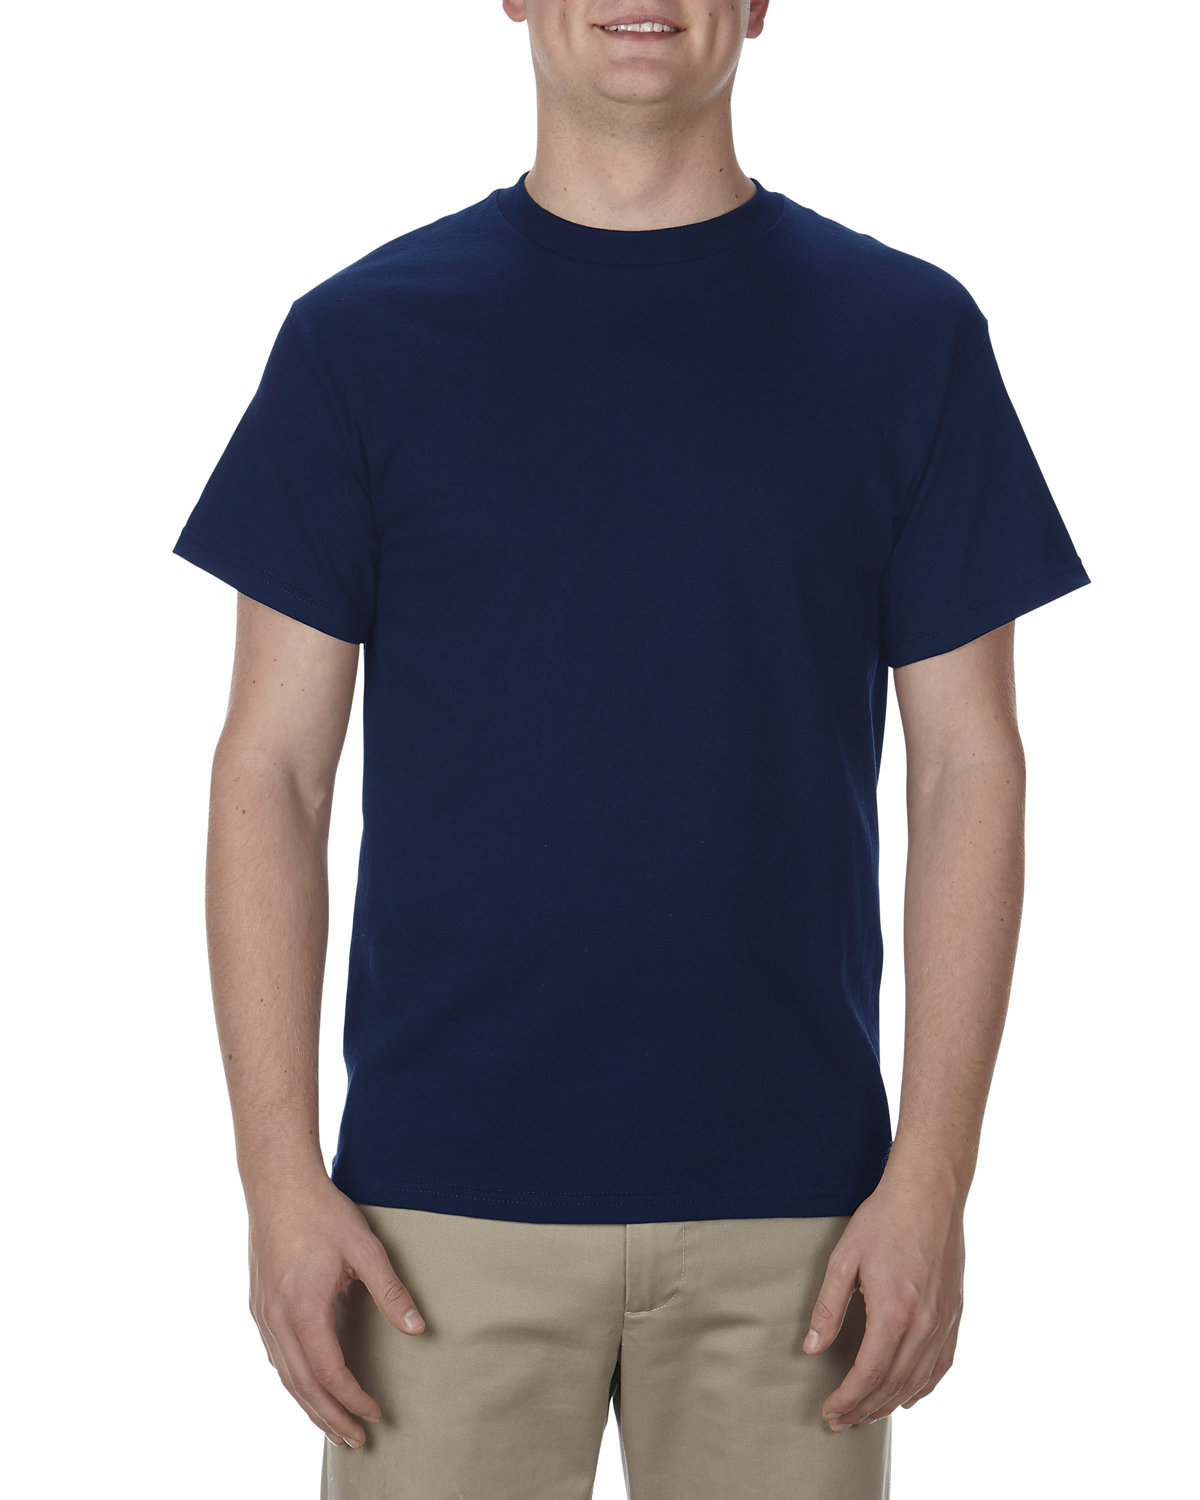 Alstyle Adult 5.1 oz., 100% Soft Spun Cotton T-Shirt NAVY 